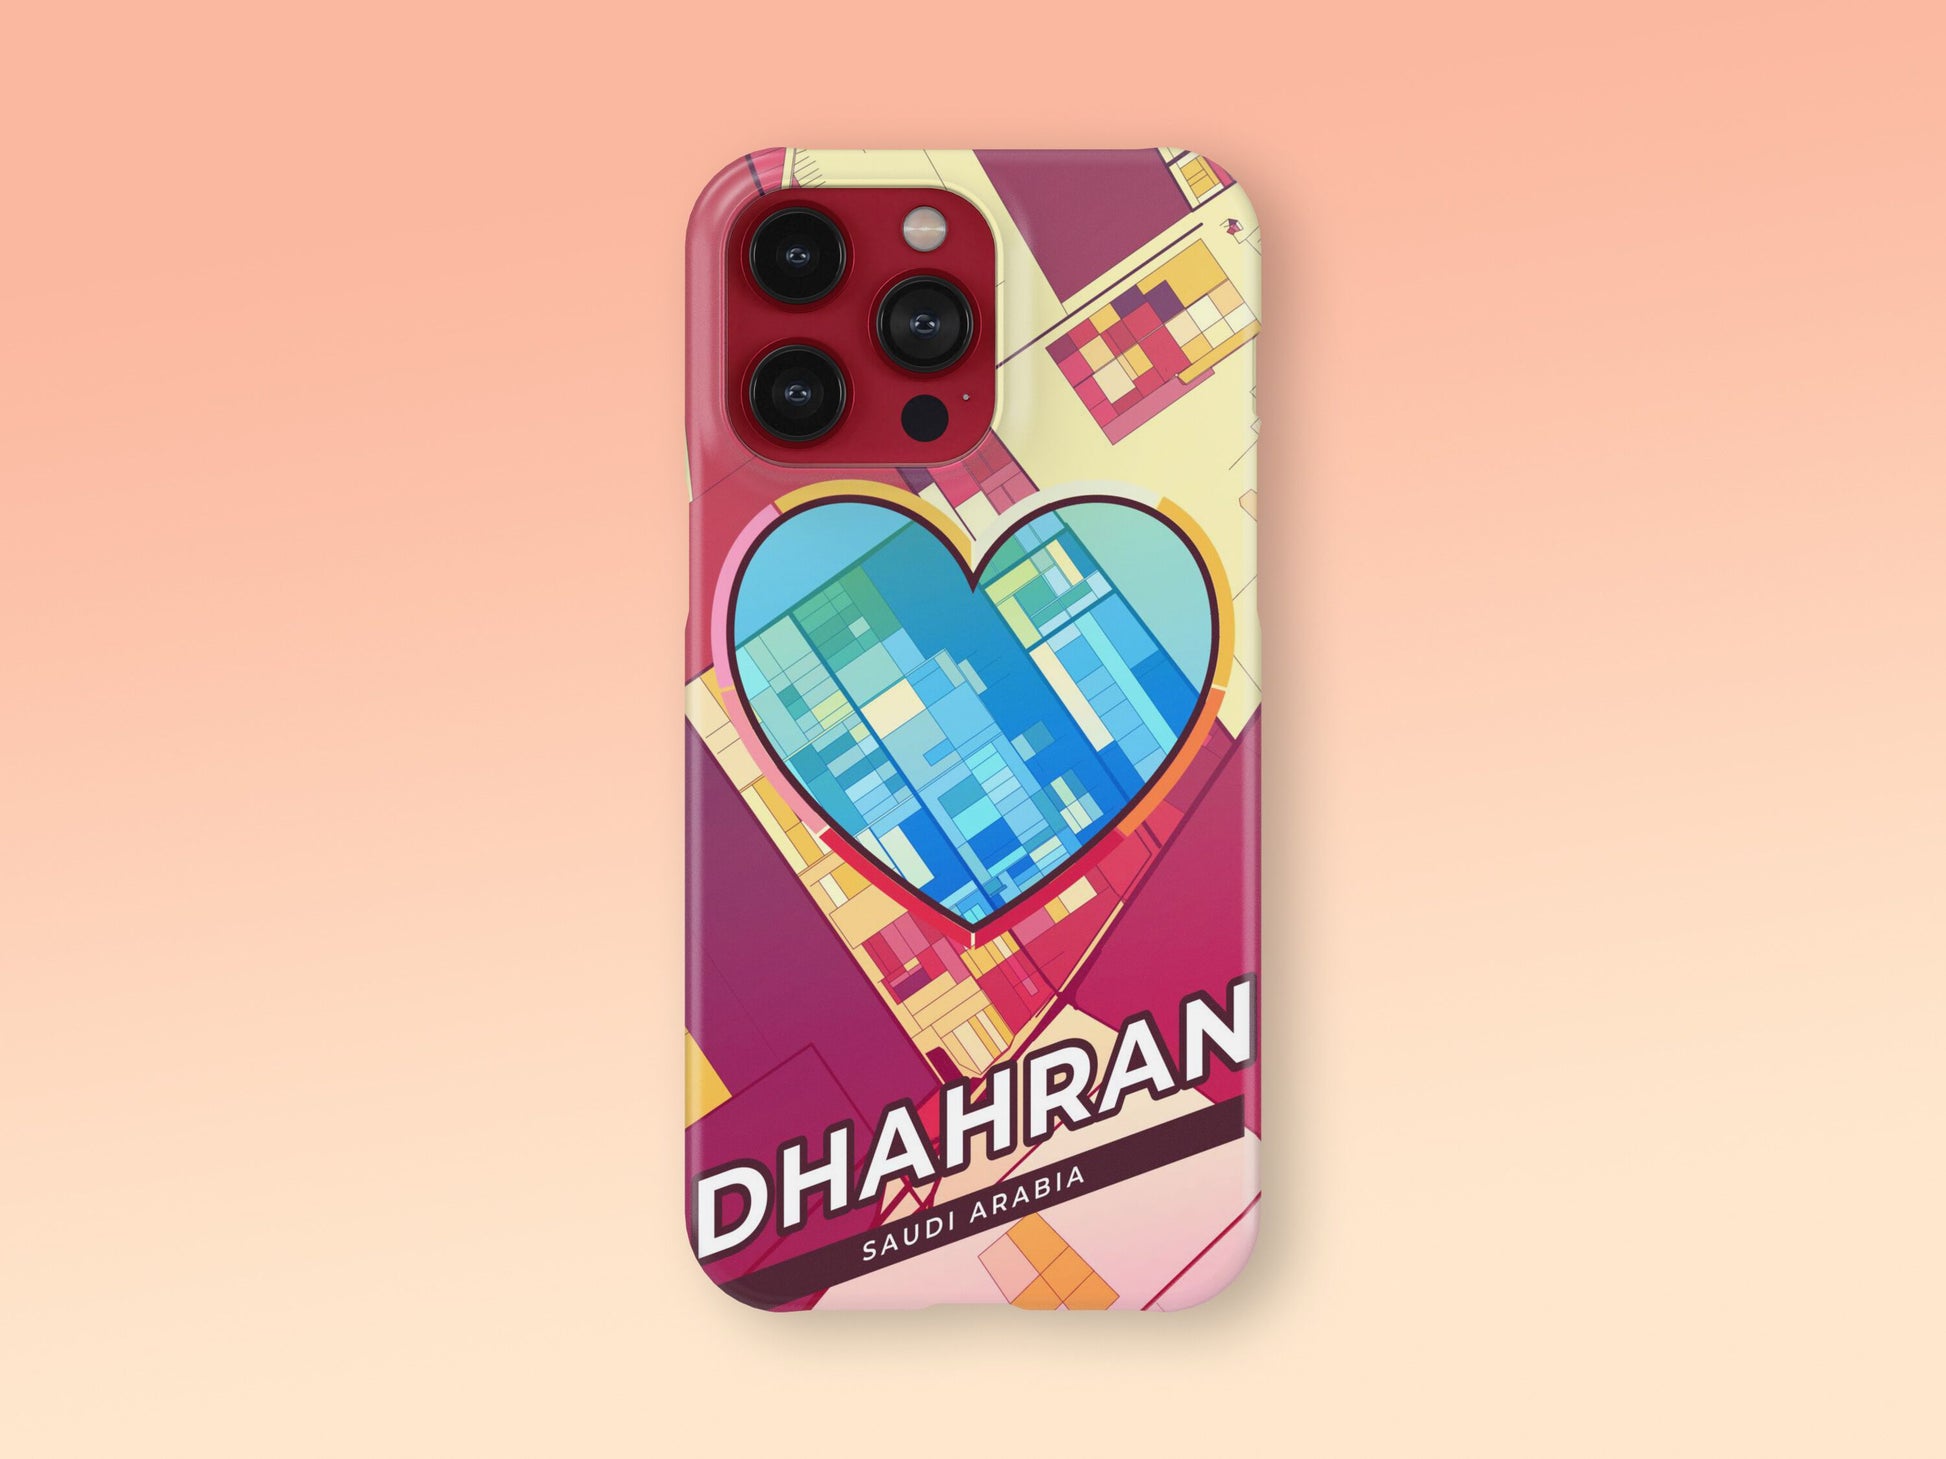 Dhahran Saudi Arabia slim phone case with colorful icon. Birthday, wedding or housewarming gift. Couple match cases. 2